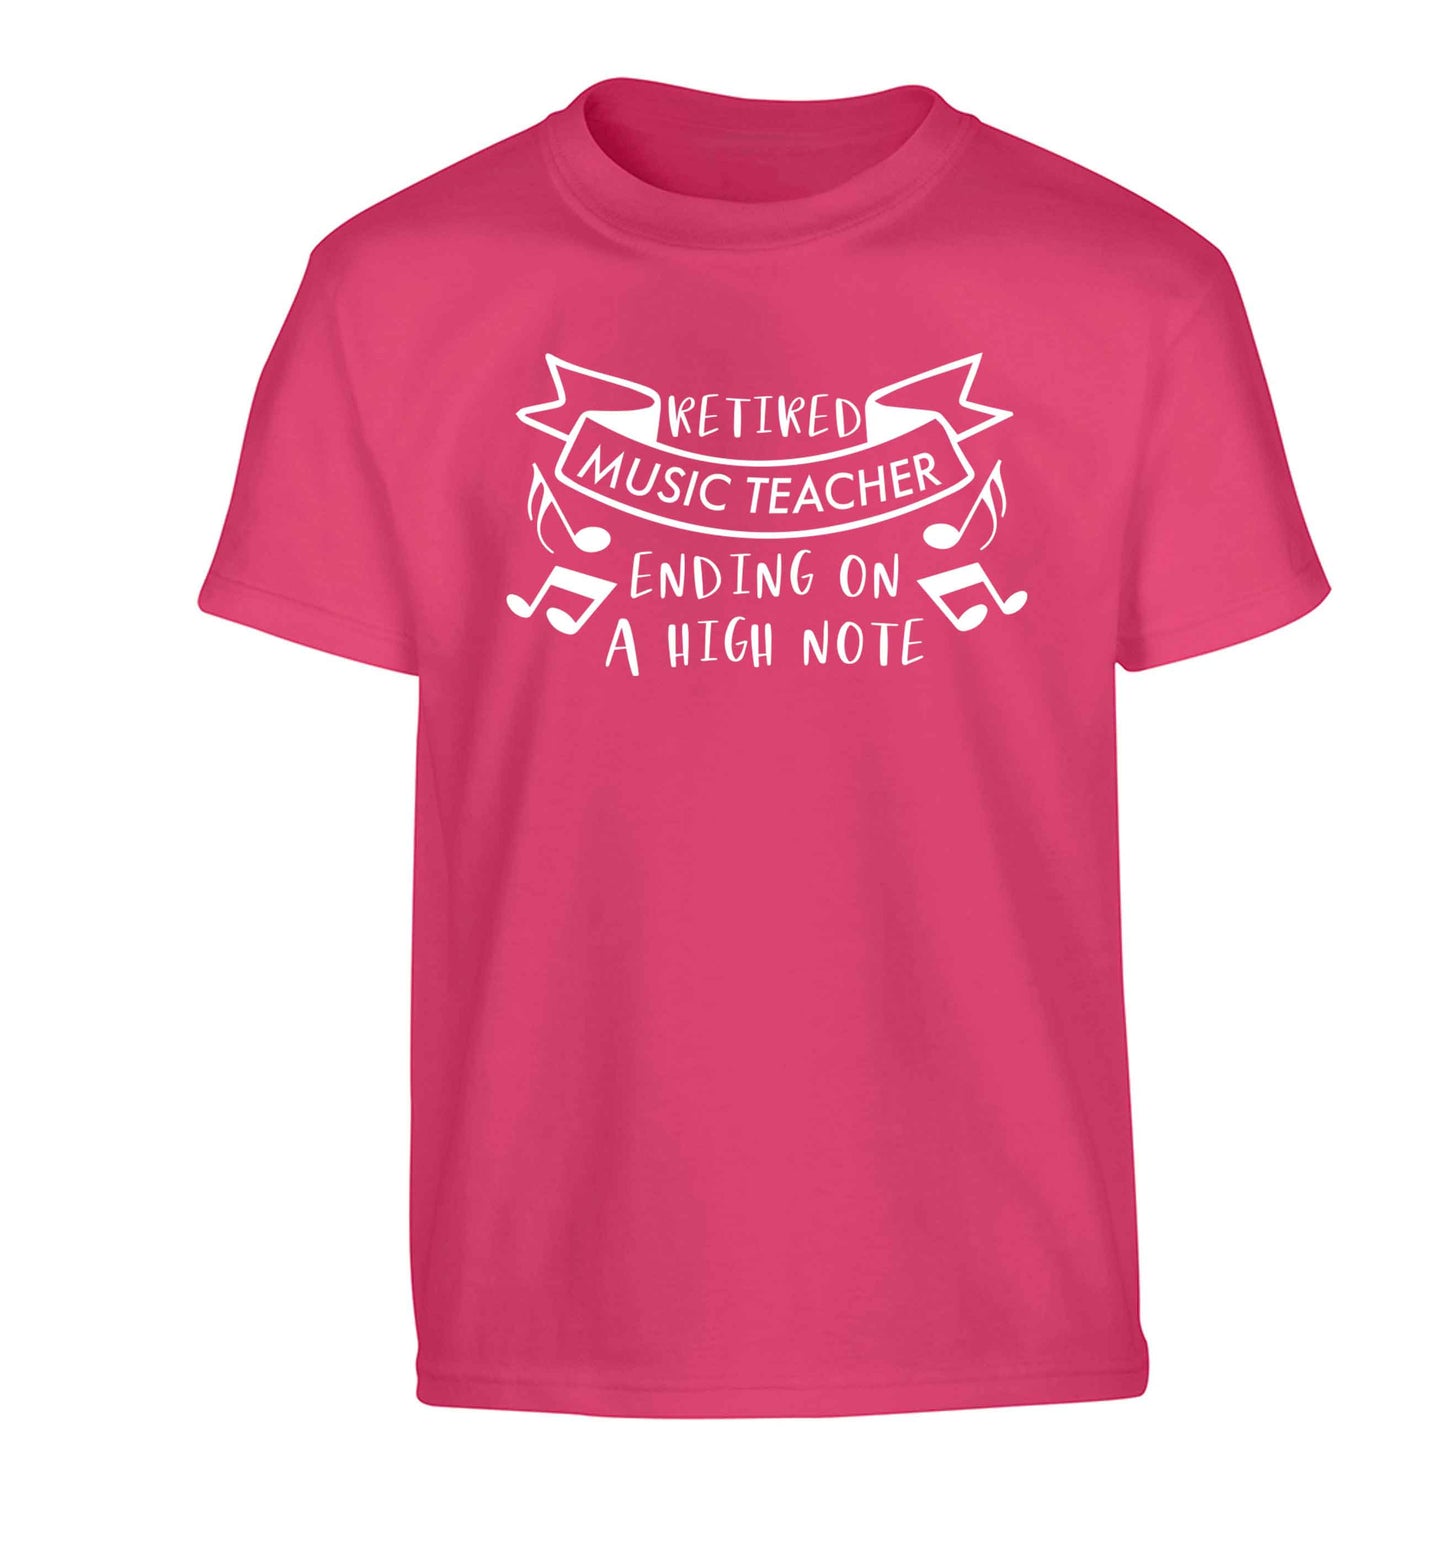 Retired music teacher ending on a high note Children's pink Tshirt 12-13 Years